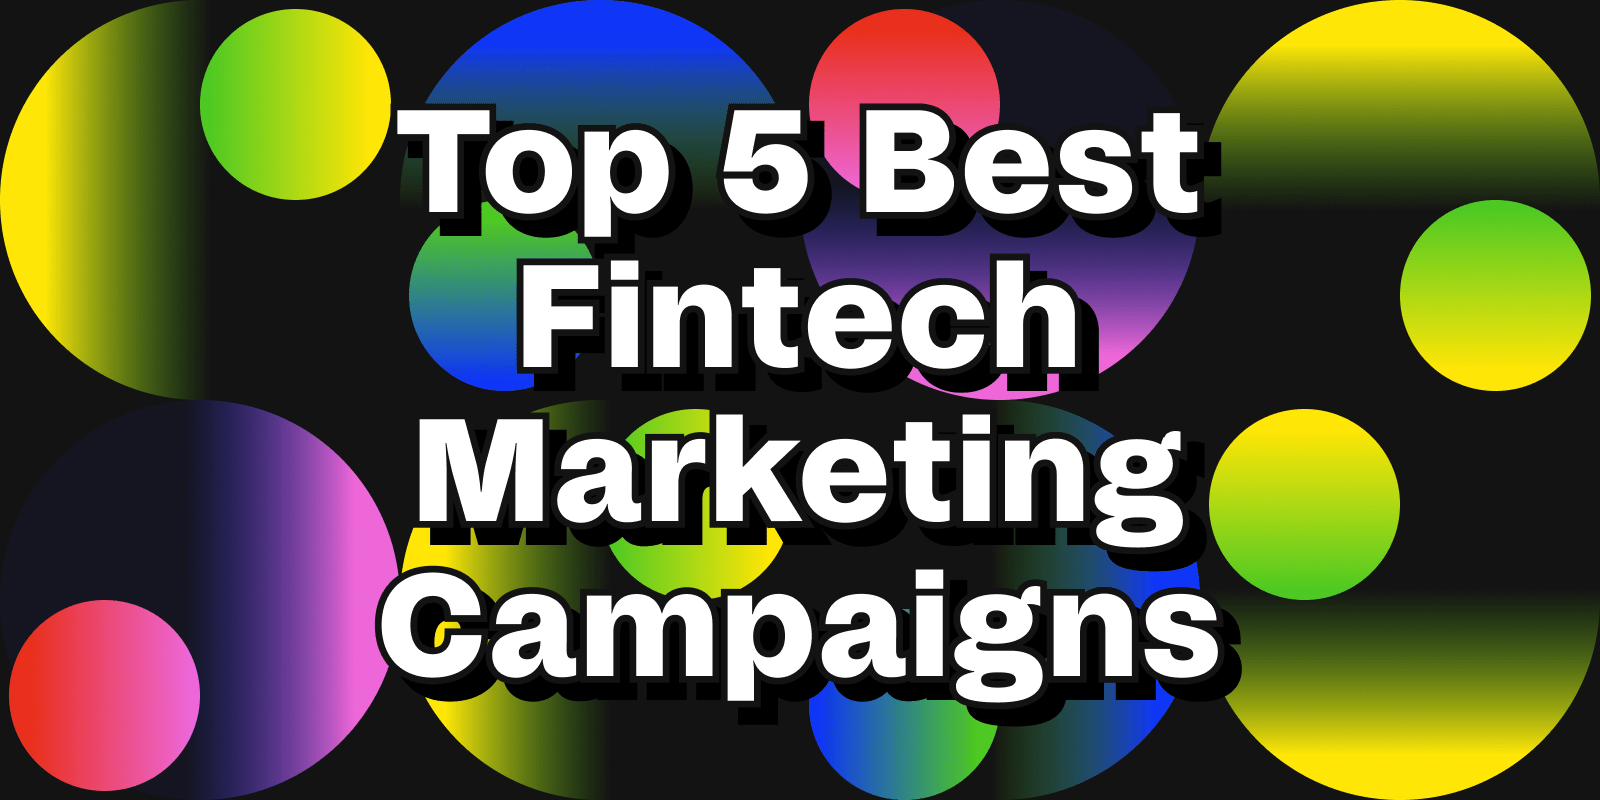 Best fintech marketing campaigns